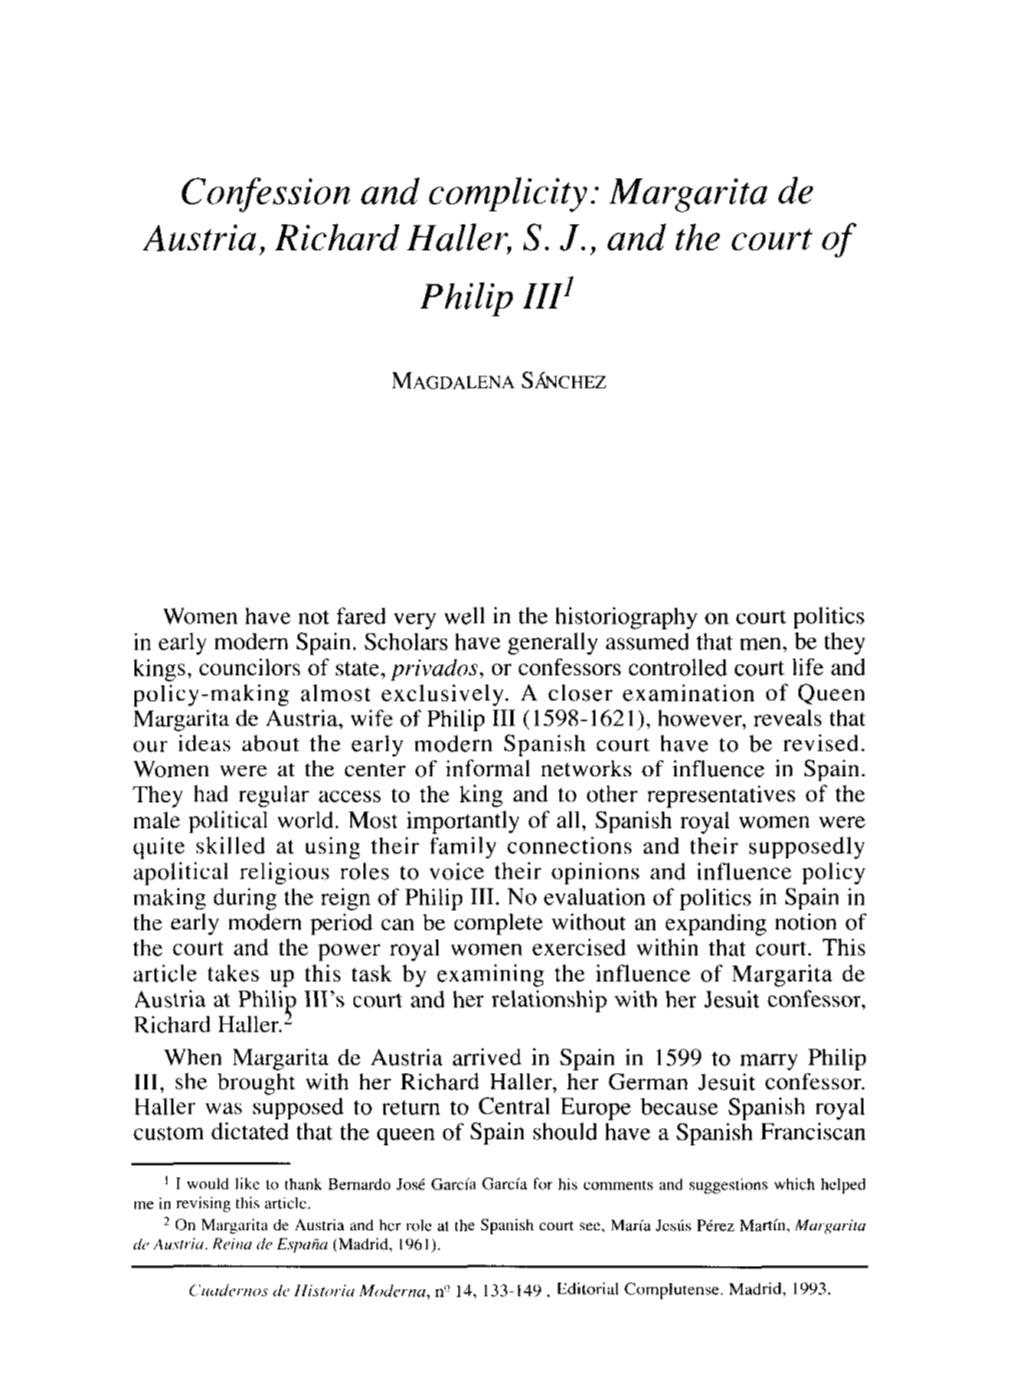 Confession and Complicity: Margarita De Austria, Richard Haller, S. J. And